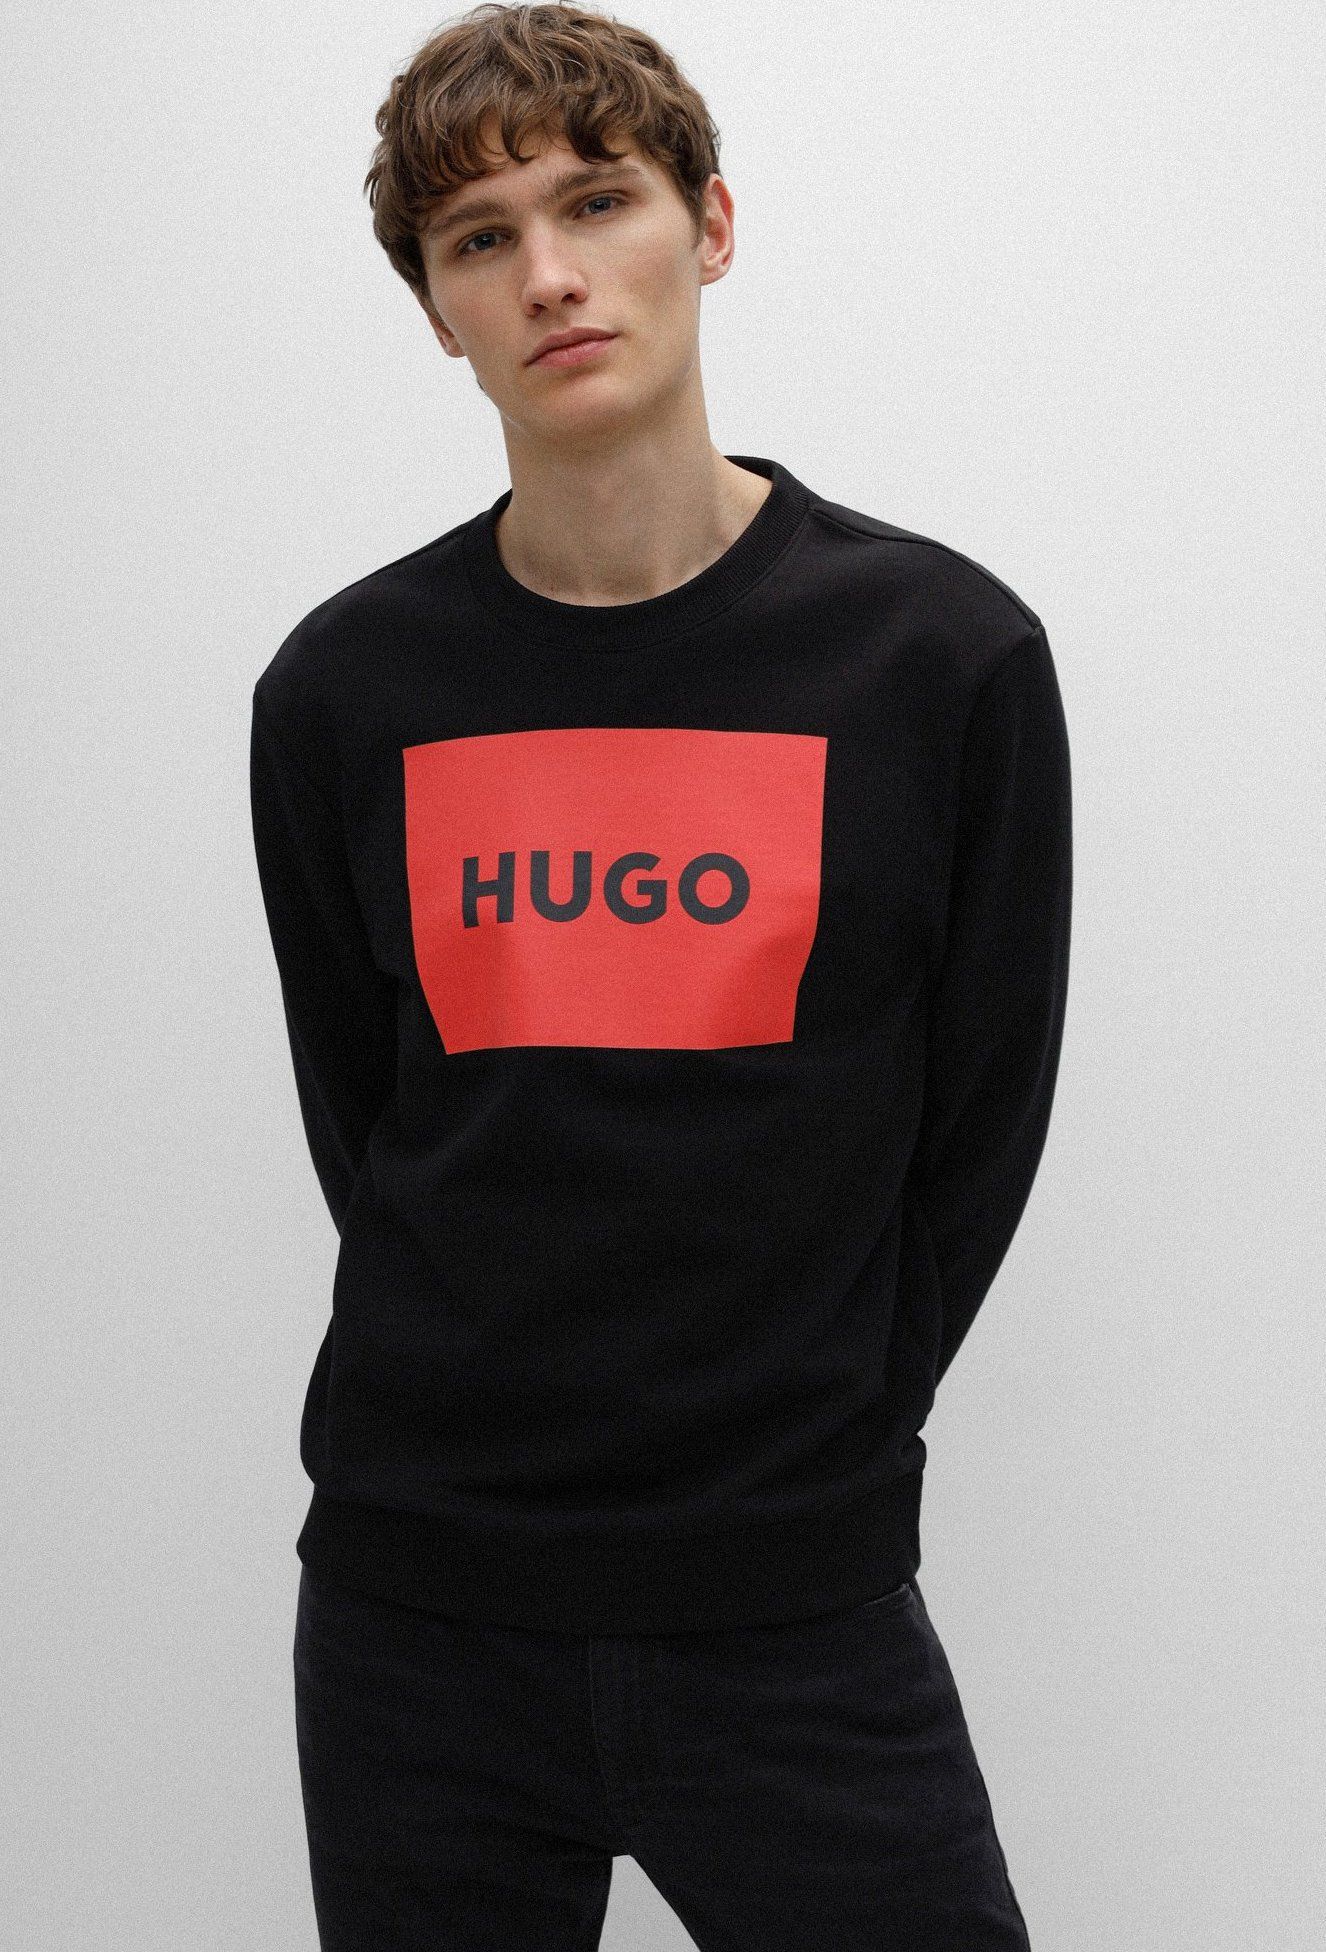 Кофта hugo. Свитшот Hugo Duragol. Свитшот Hugo Boss мужские 2022. Hugo Boss черный свитшот. Свитшот Hugo Boss мужской черный.